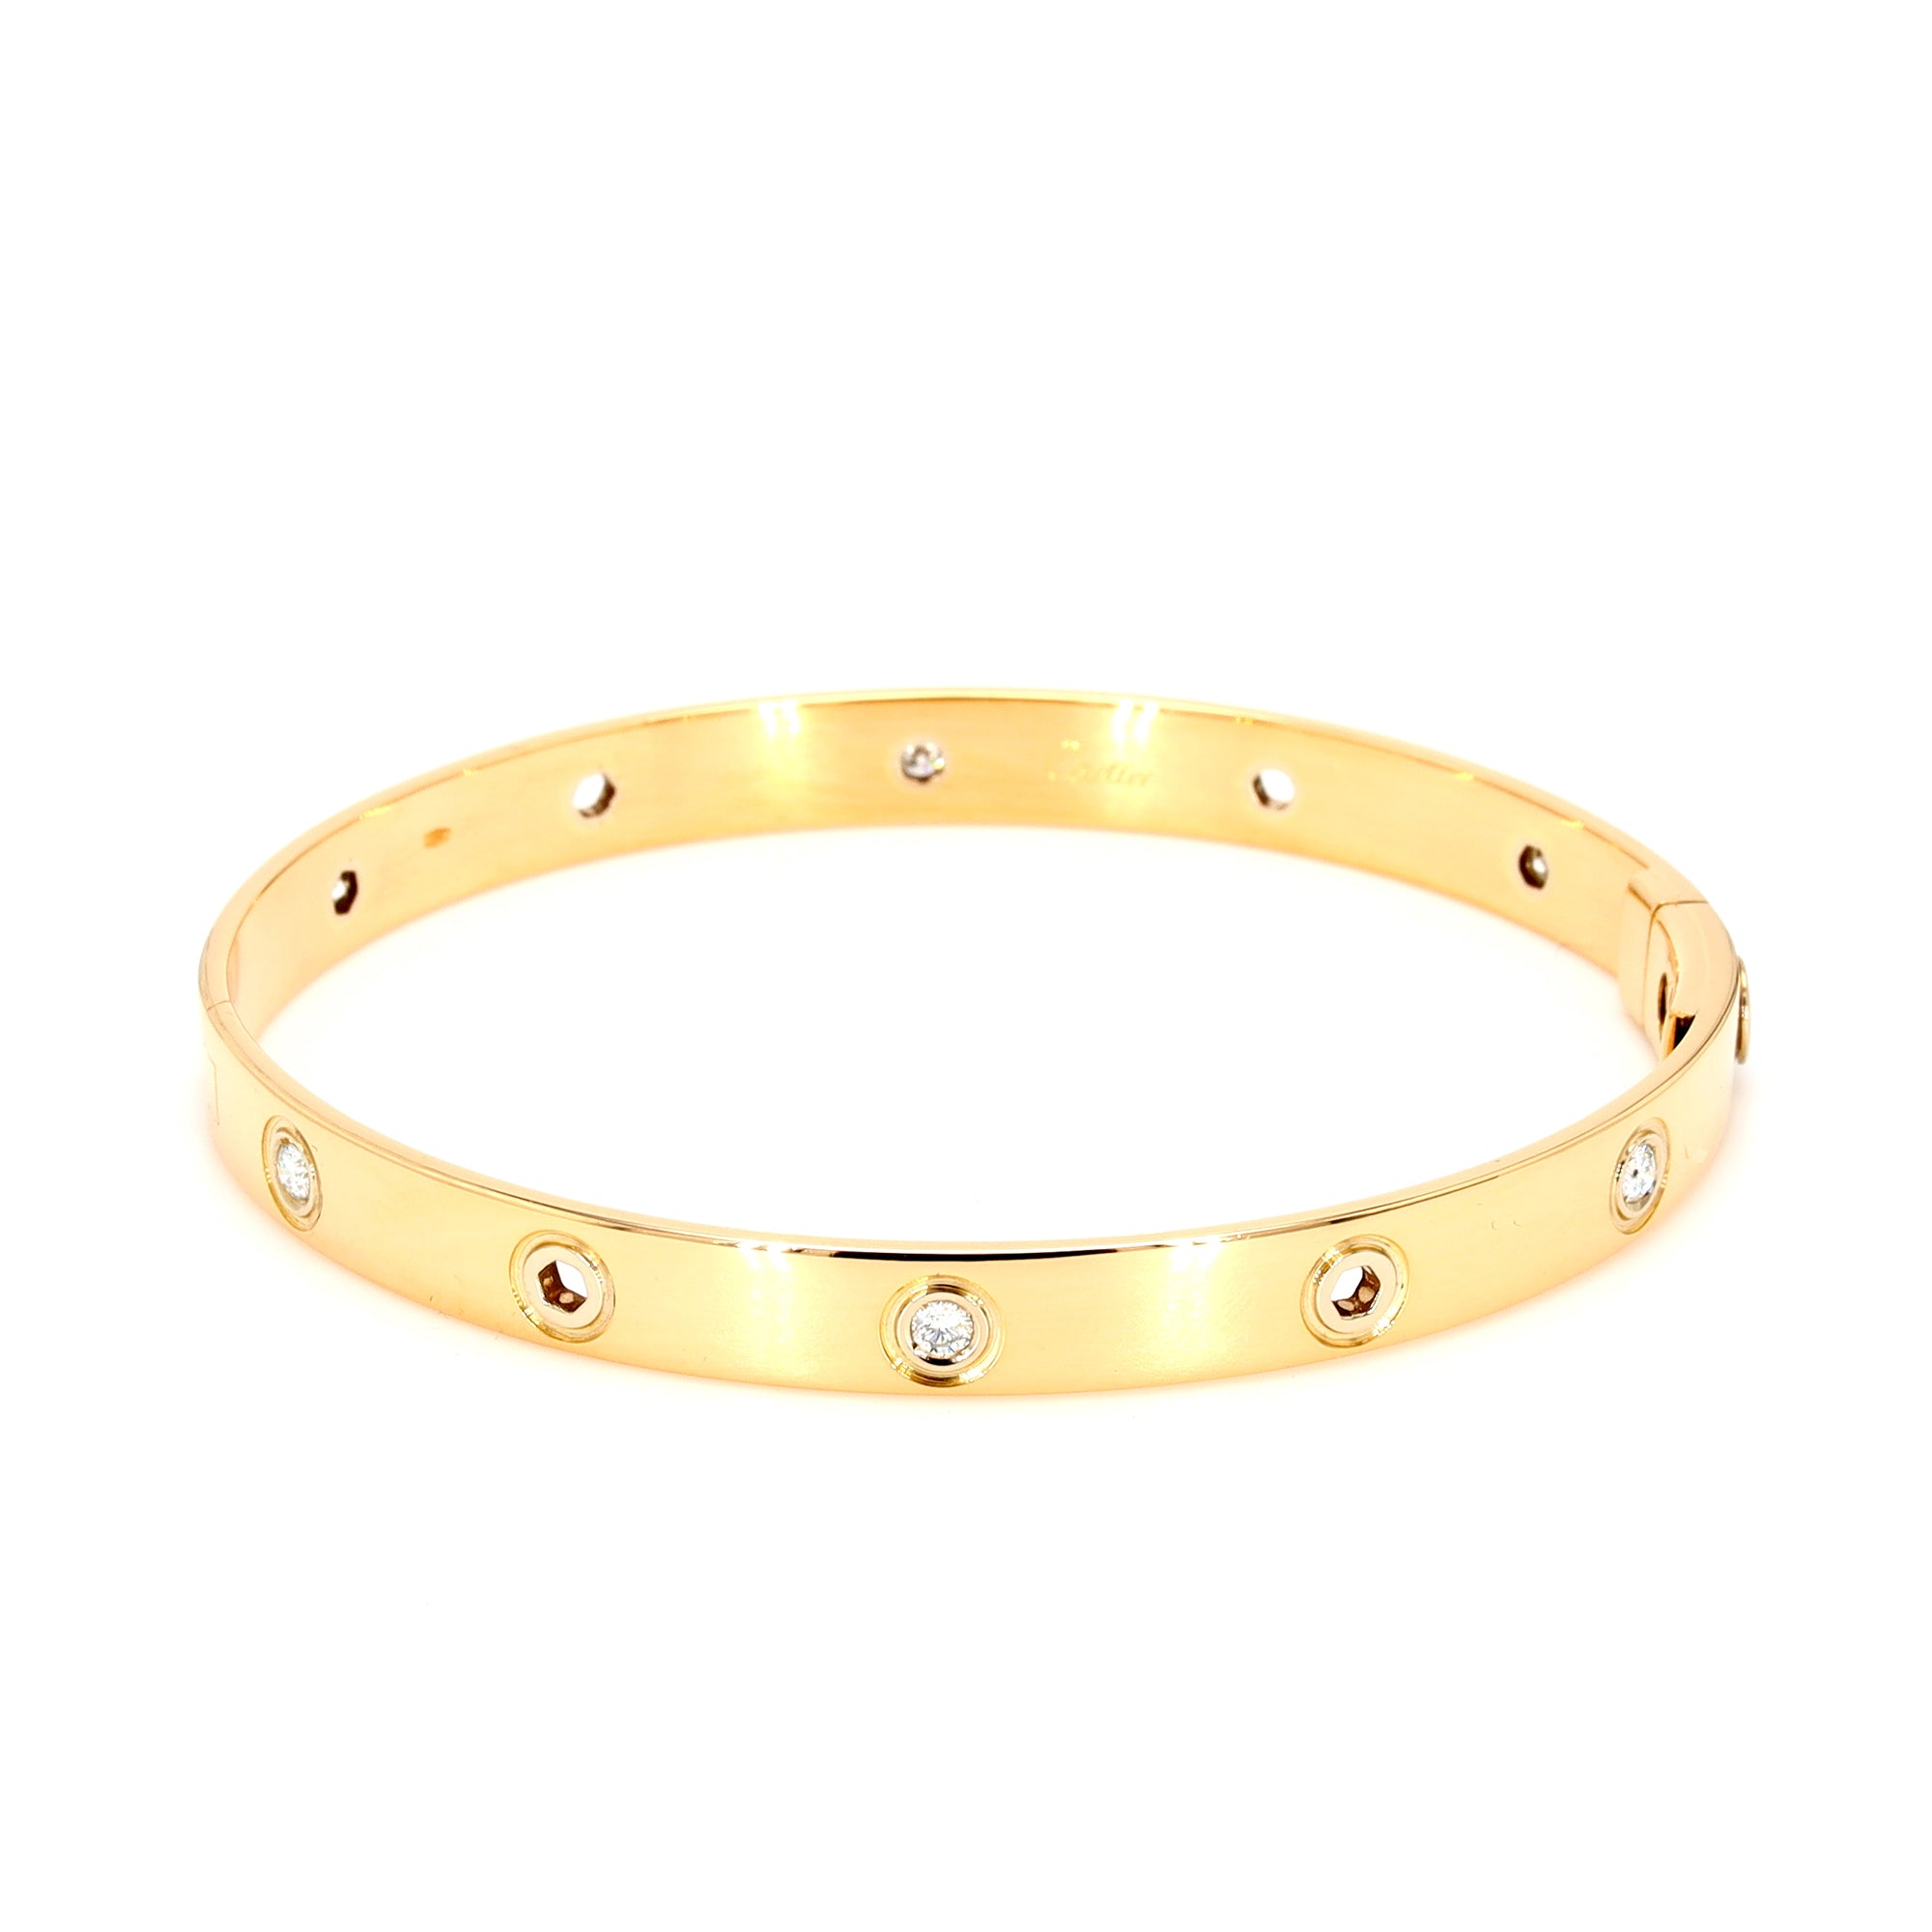 Cartier 10 Diamond LOVE Bracelet - 18K Yellow Gold Cuff, Bracelets